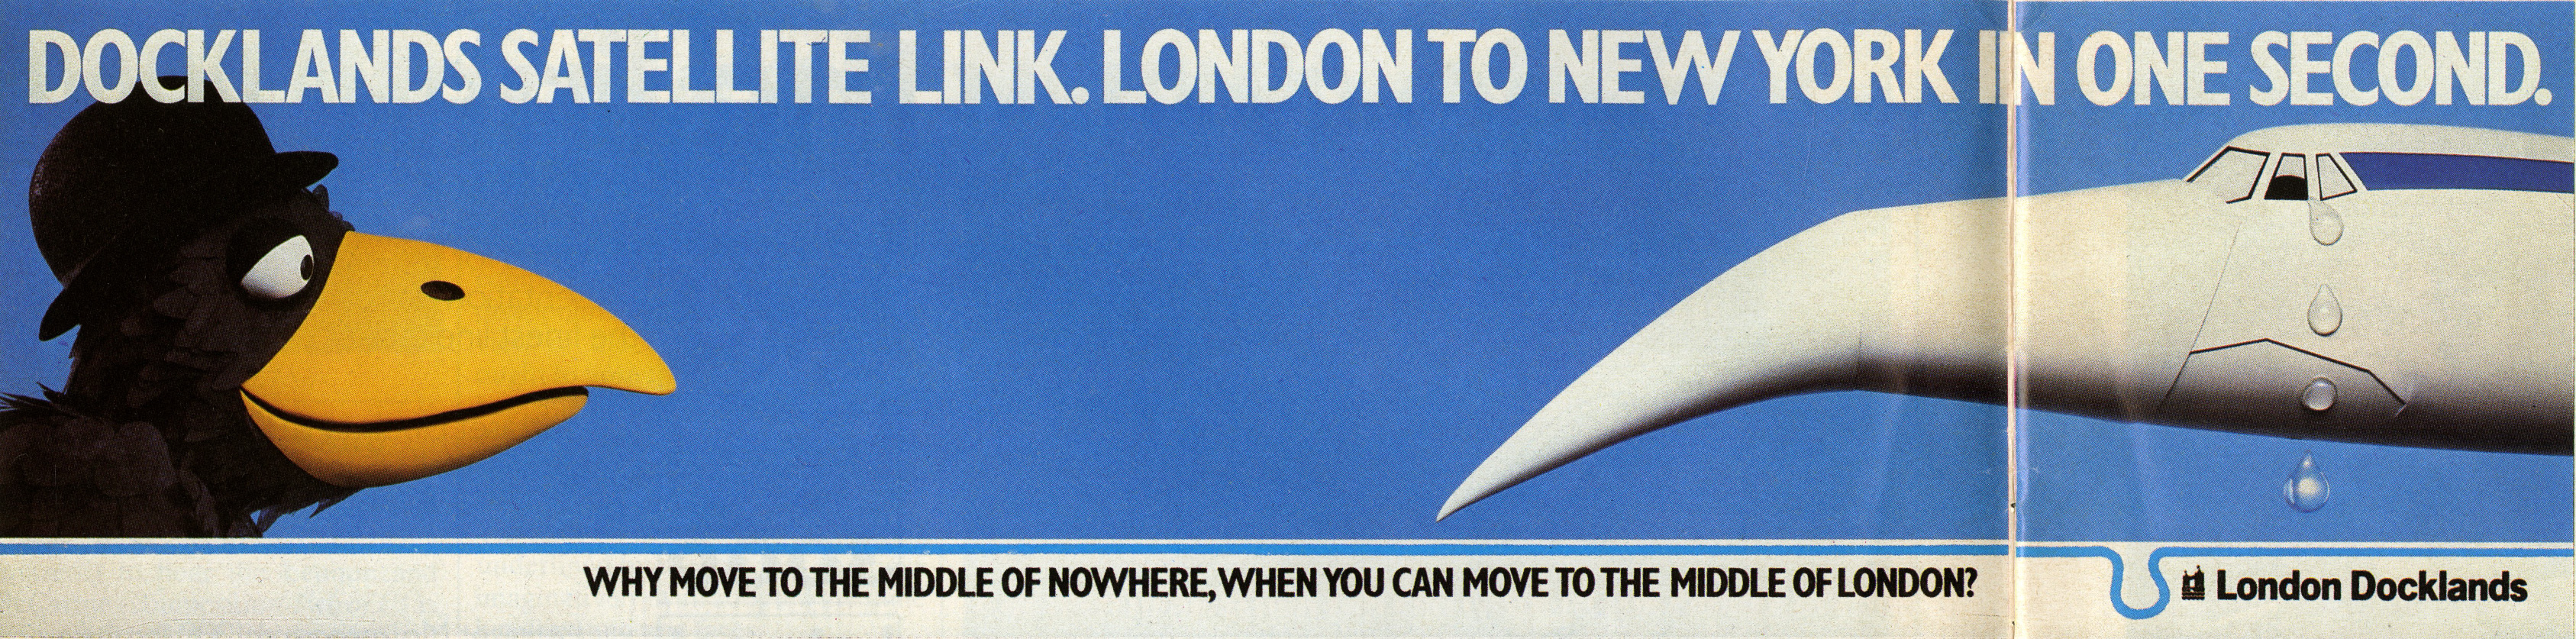 London Docklands 'Concorde' Trott-01